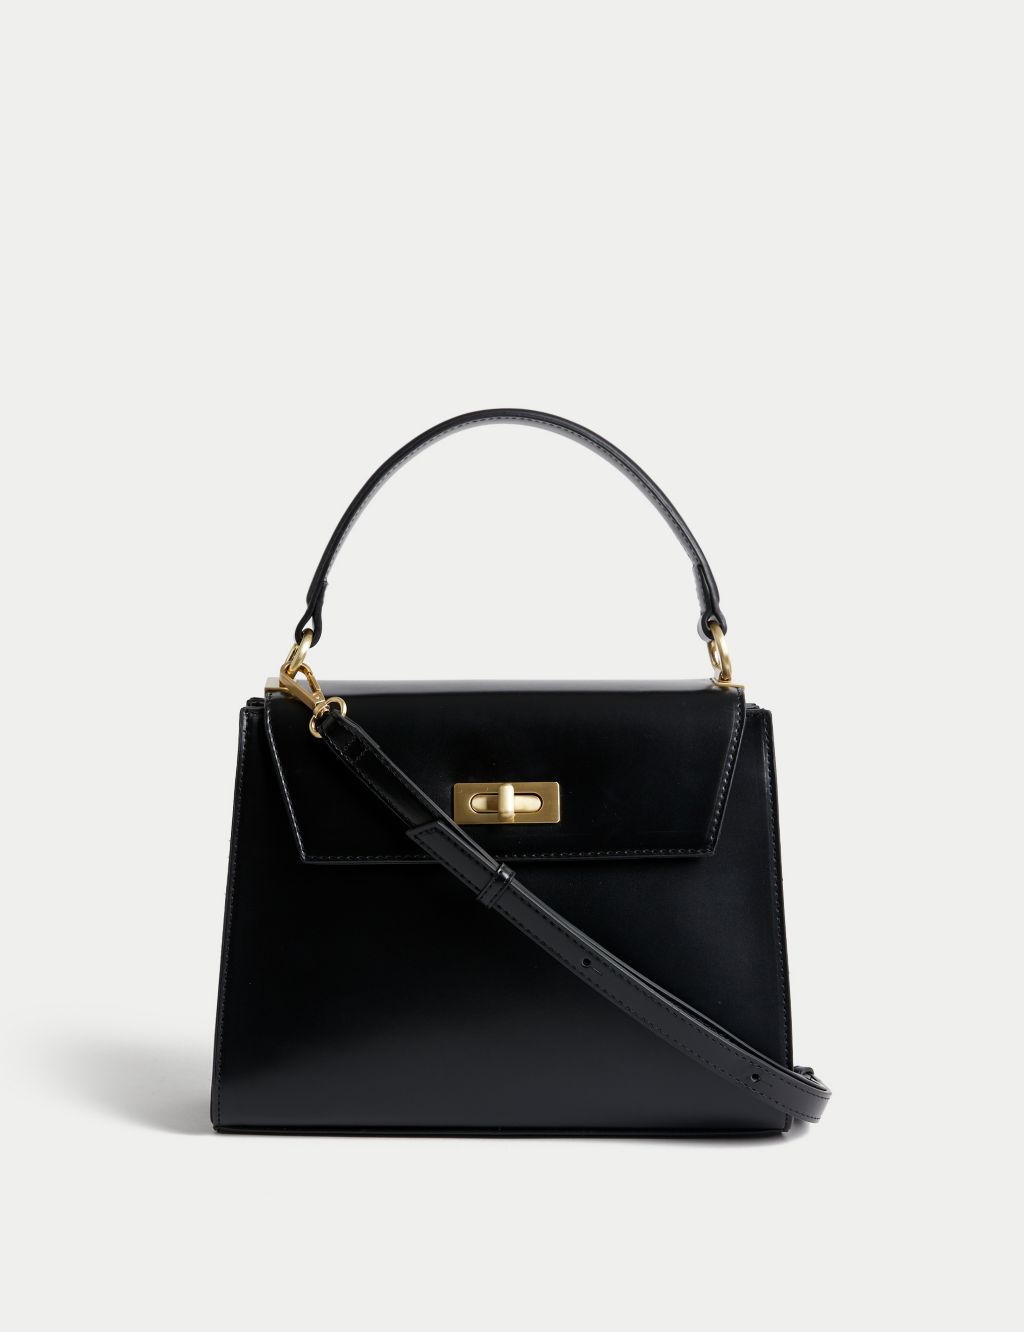 Louis Vuitton Gift Bag Paper Bag Shopping Bags Brown plus receipt holder